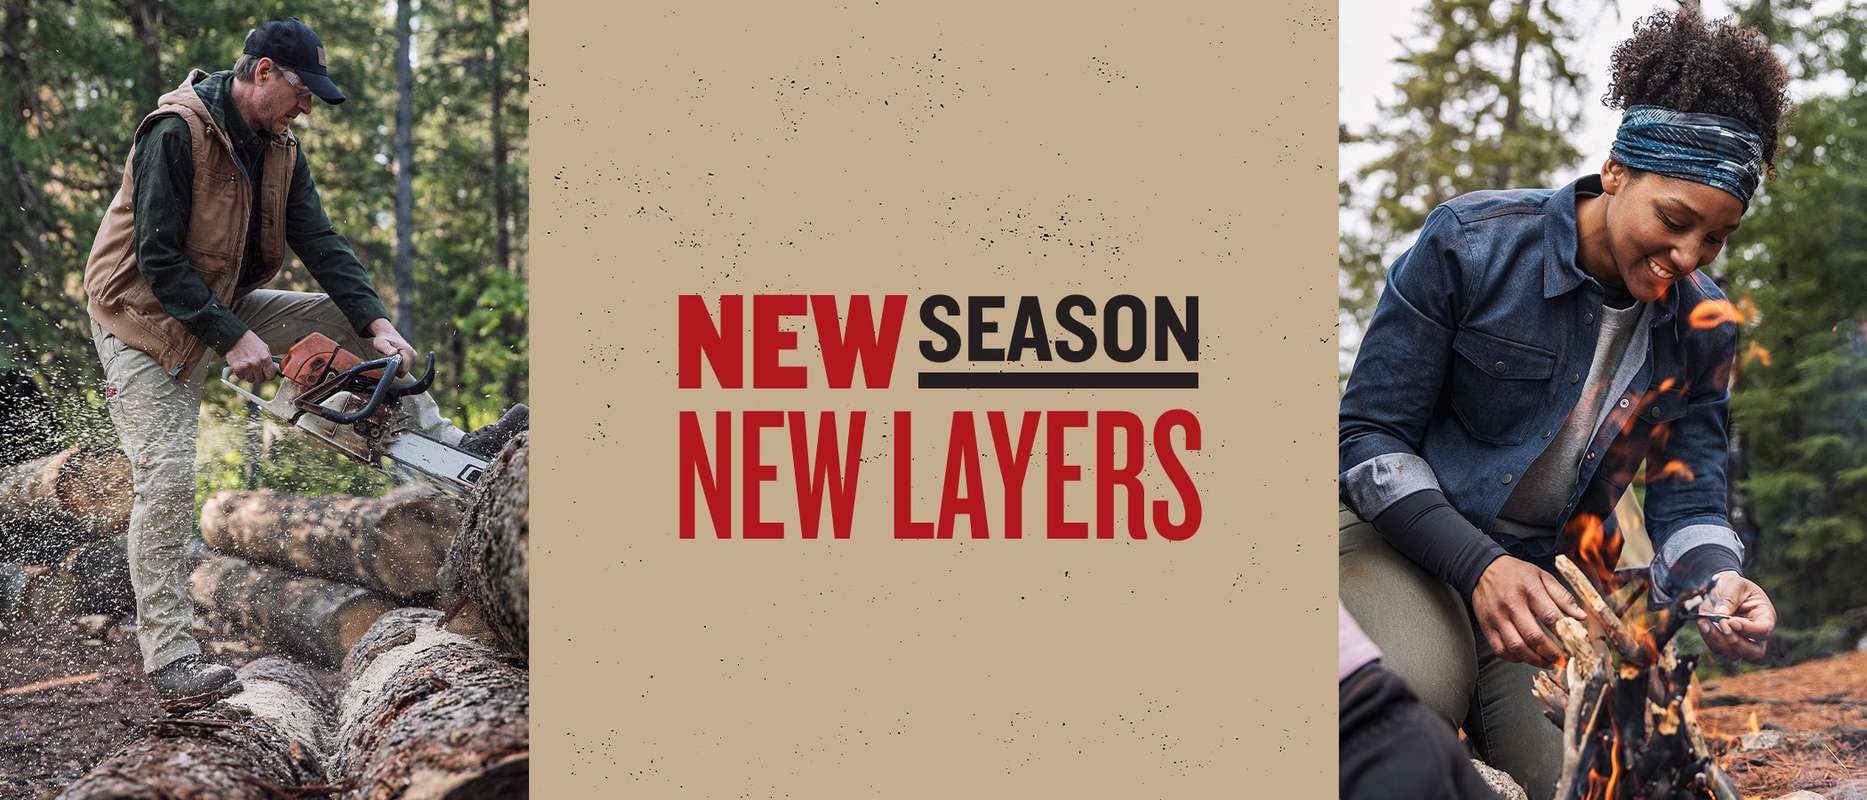 new season new layers